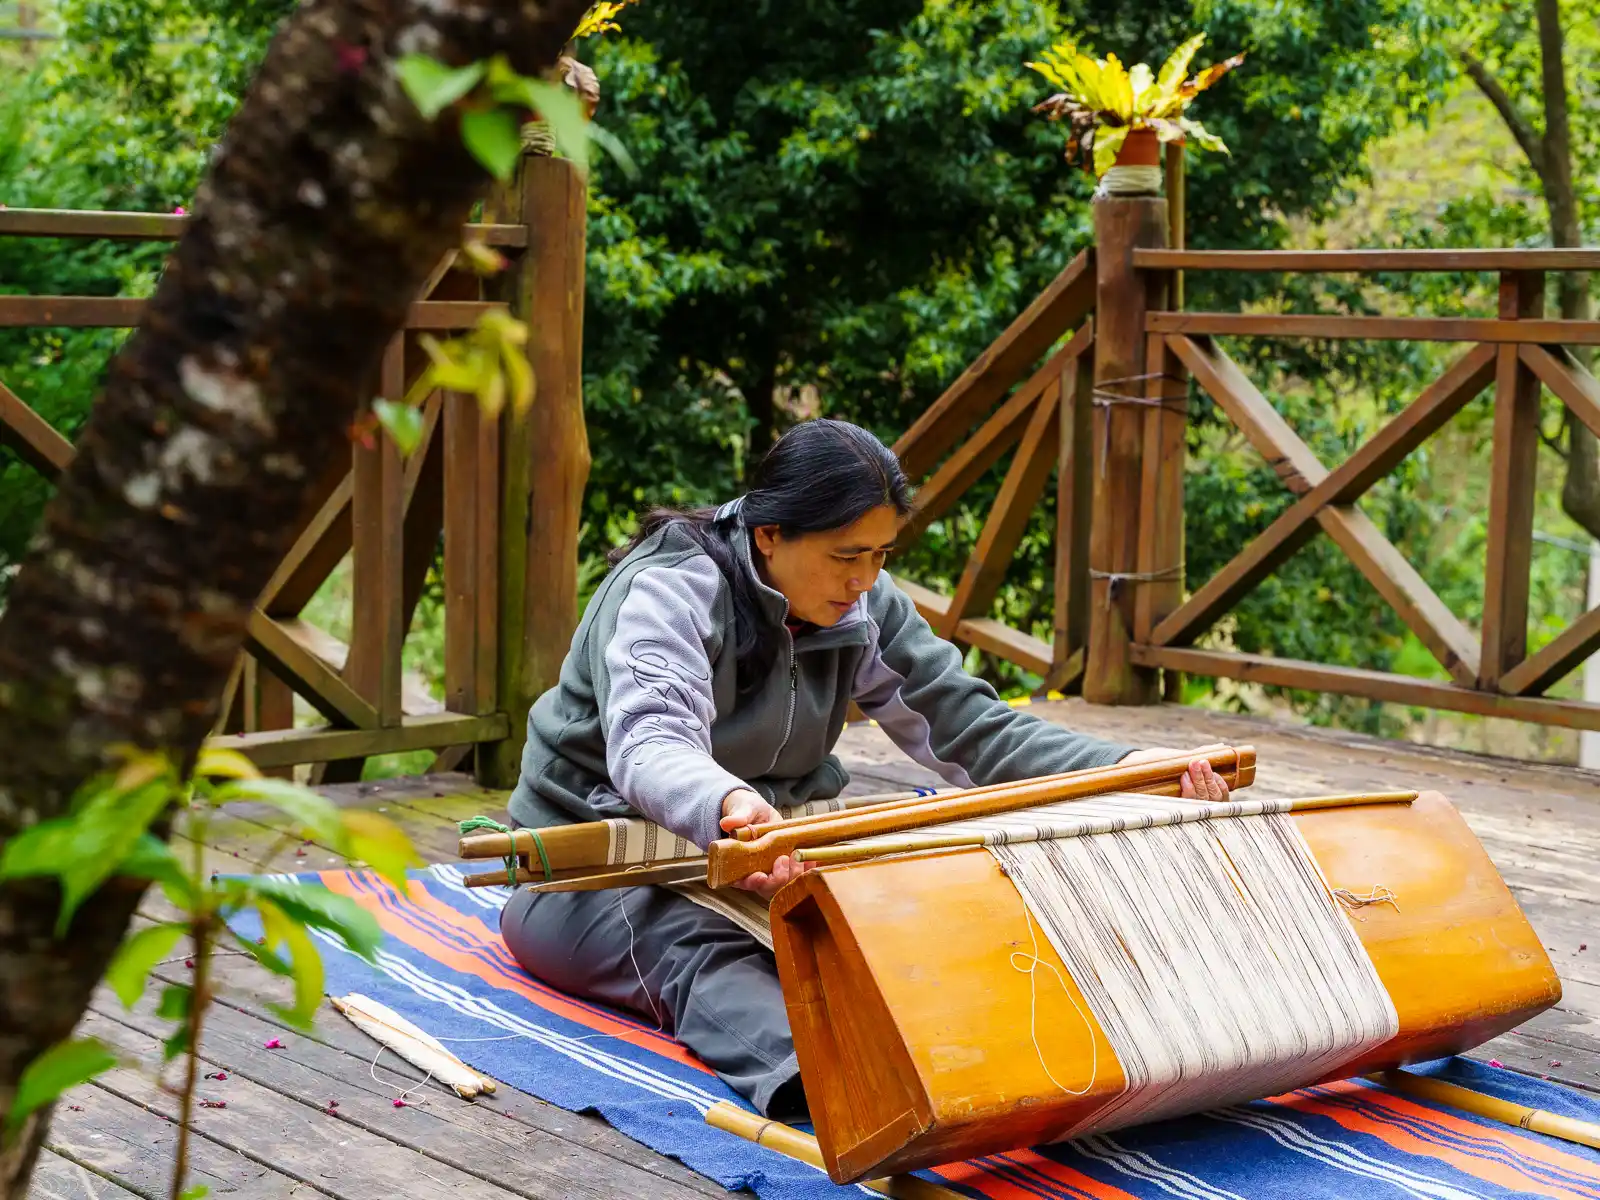 Mrs. Lin demonstrates weaving using a traditional Atayal loom.